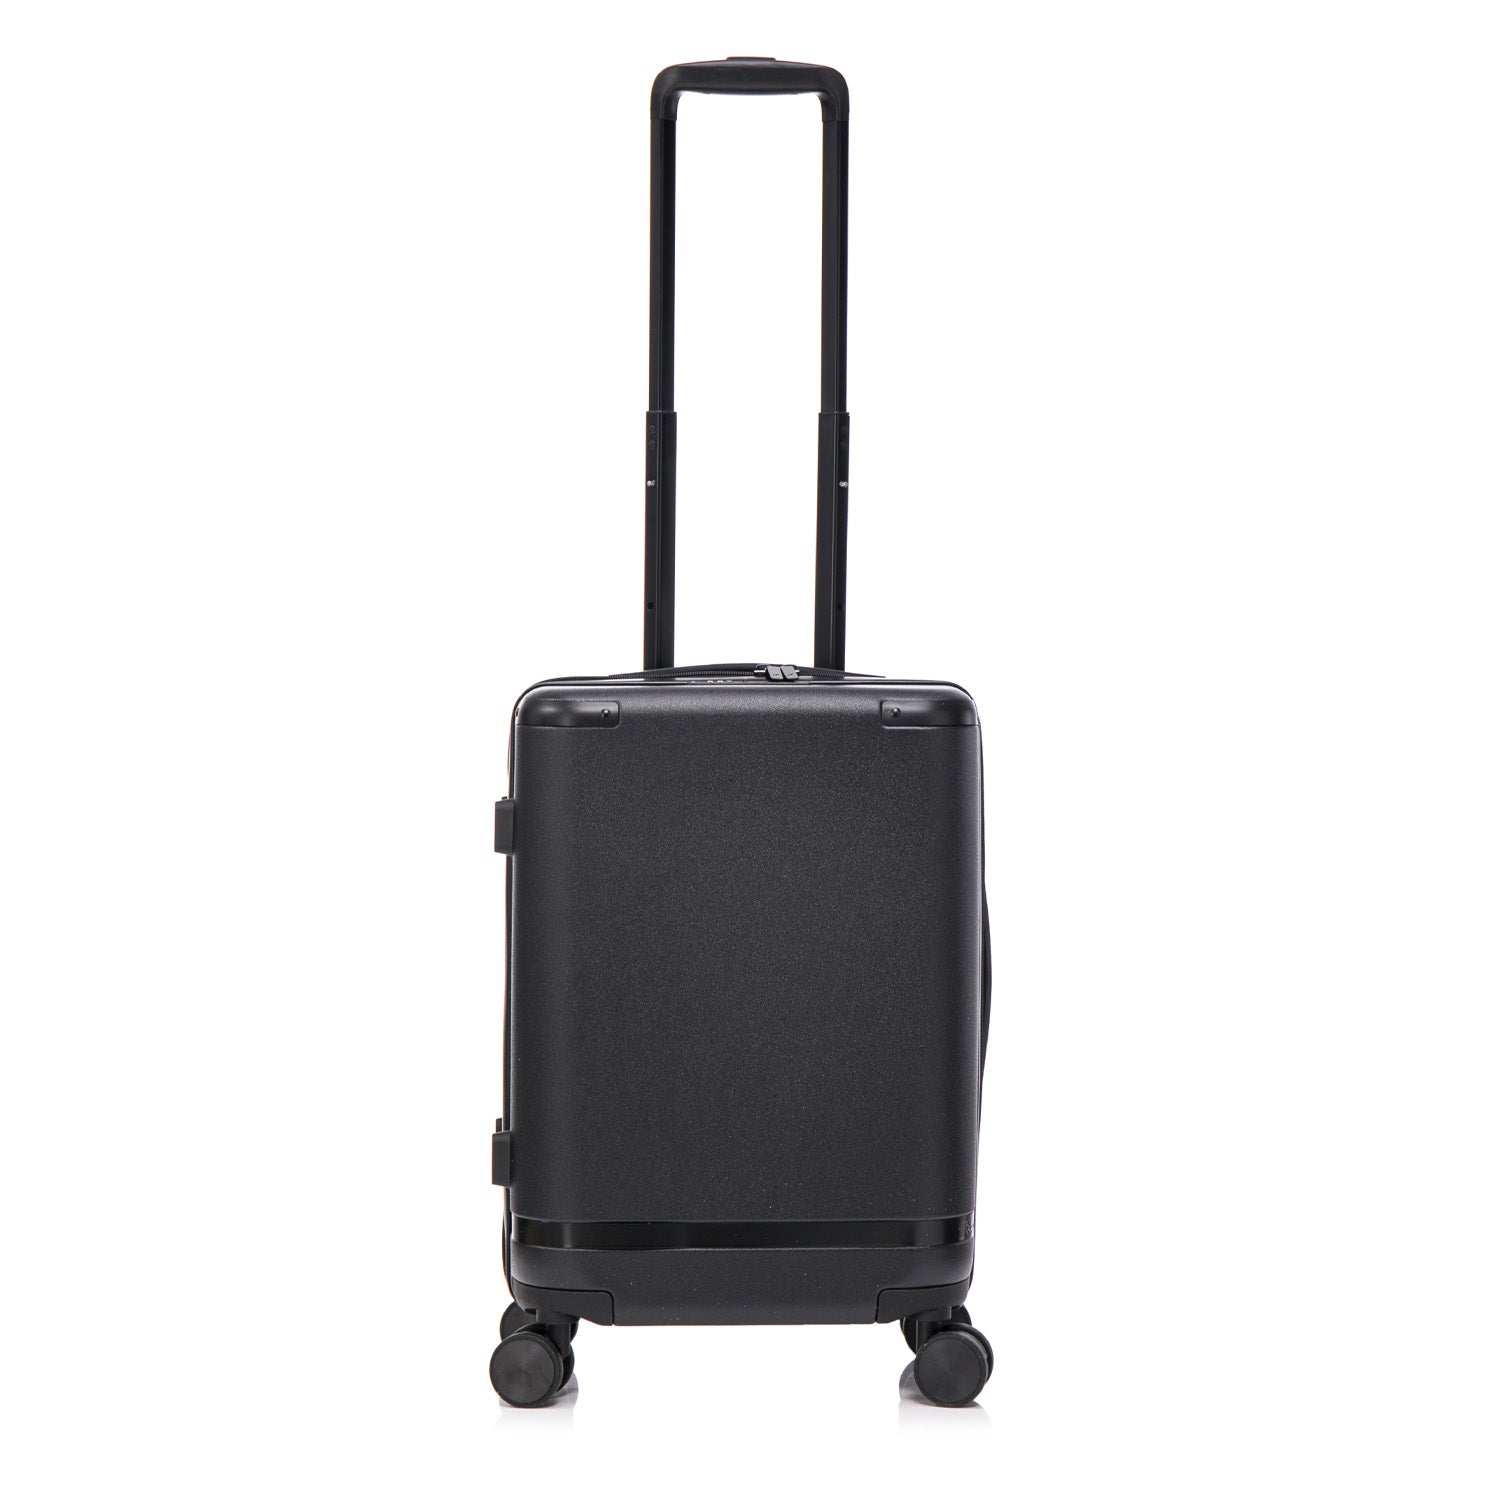 Qantas- QF250 ROME 56cm Small cabin spinner suitcase - Black